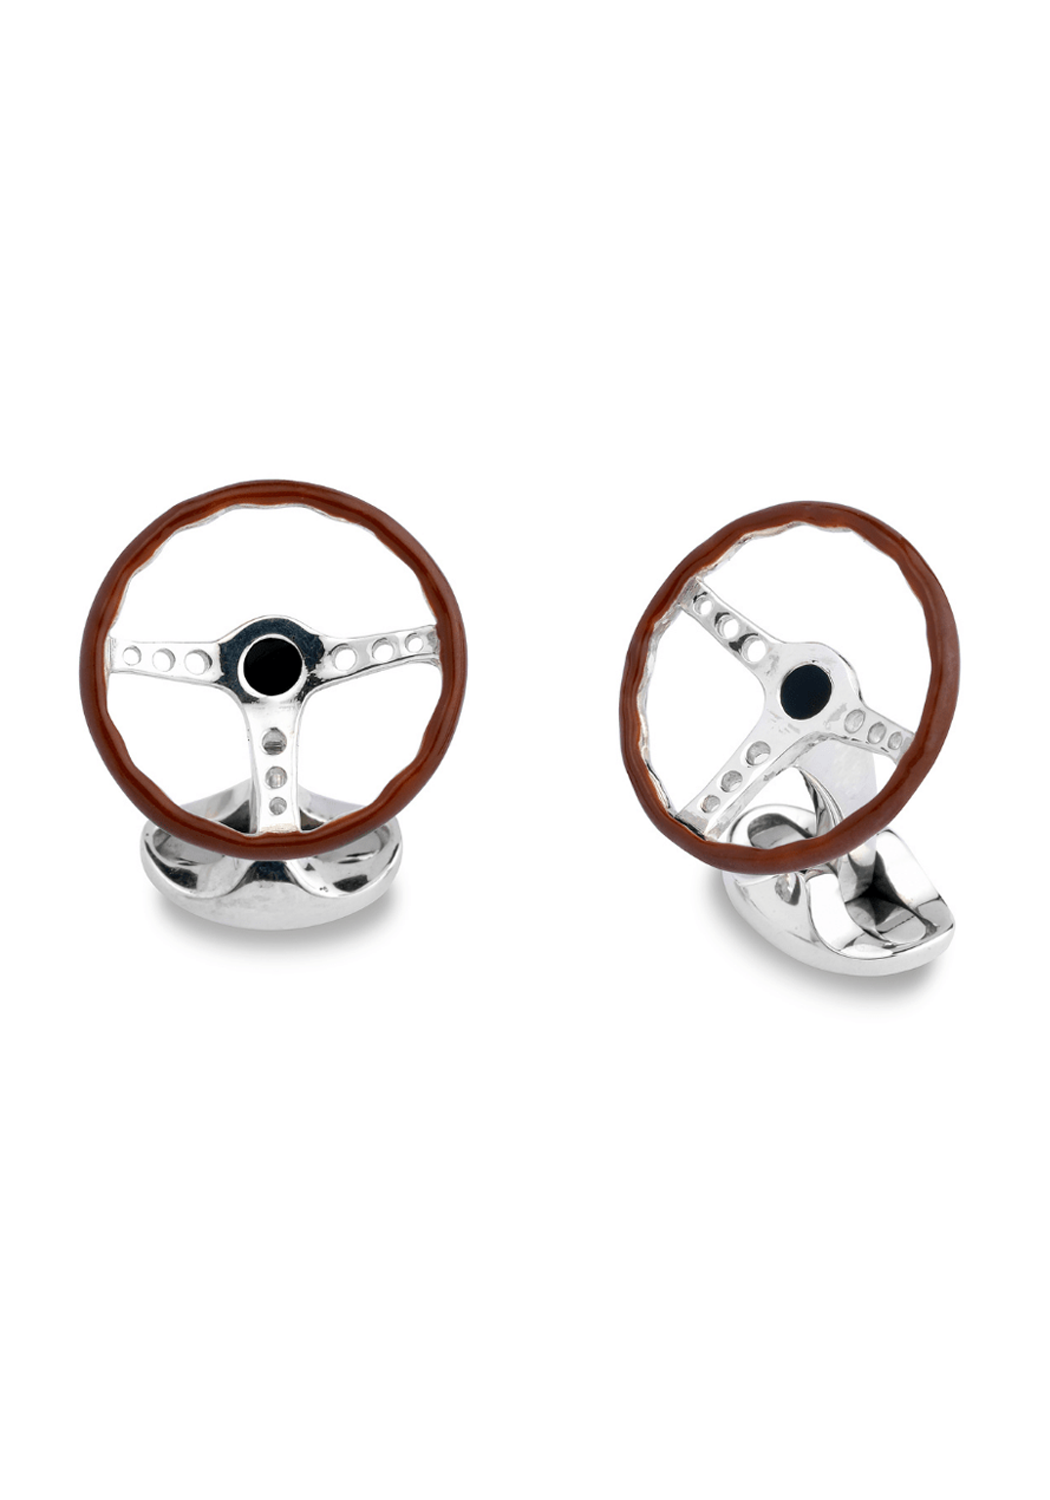 Deakin & Francis Sterling Silver Vintage Steering Wheel Cufflinks | C1614S2022 | OsterJewelers.com